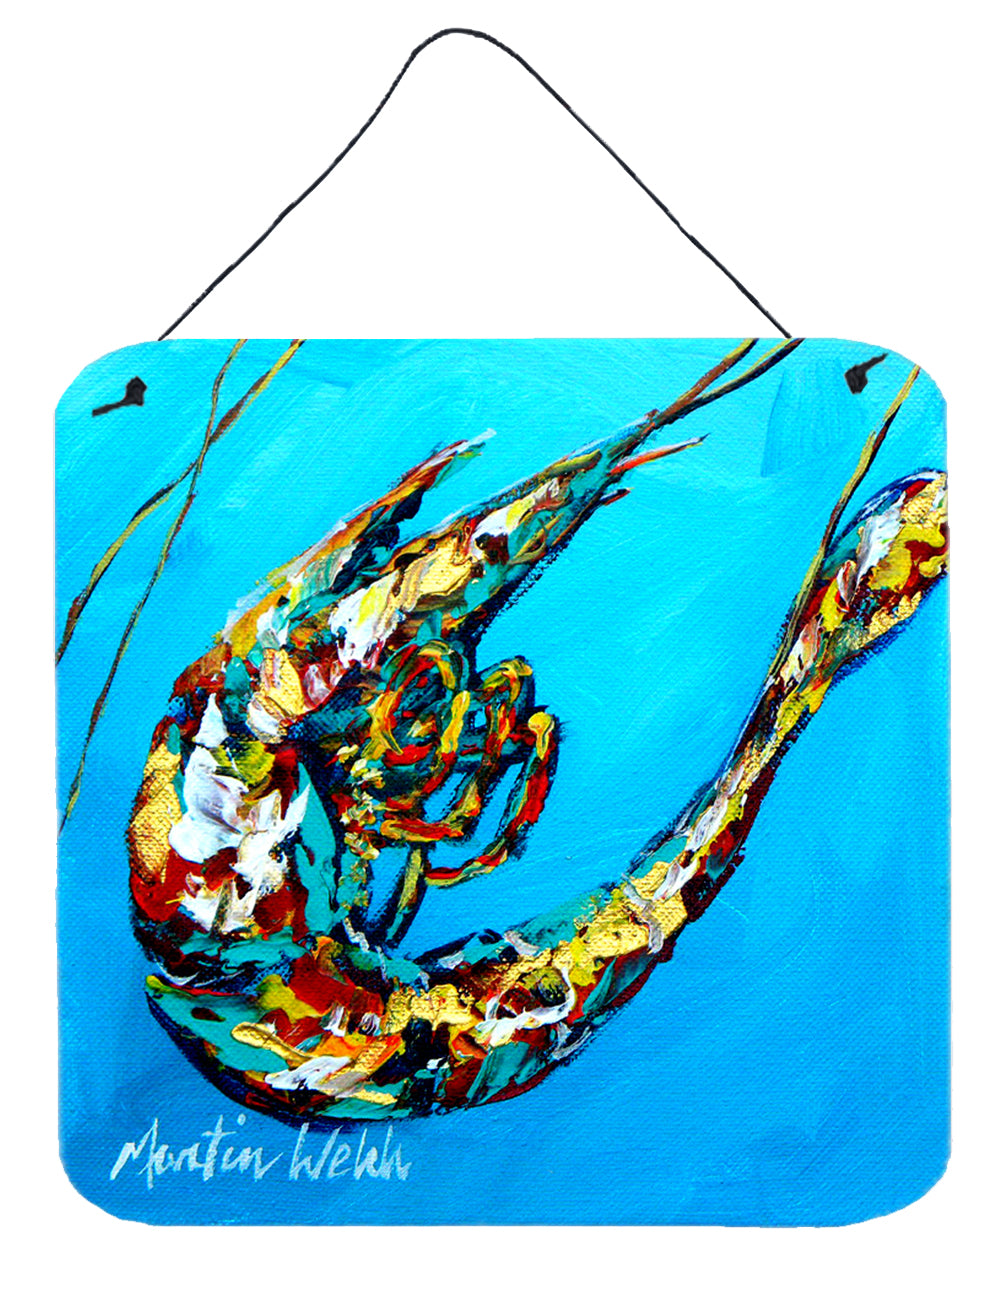 Buy this Shrimp Baby Shrimp Wall or Door Hanging Prints